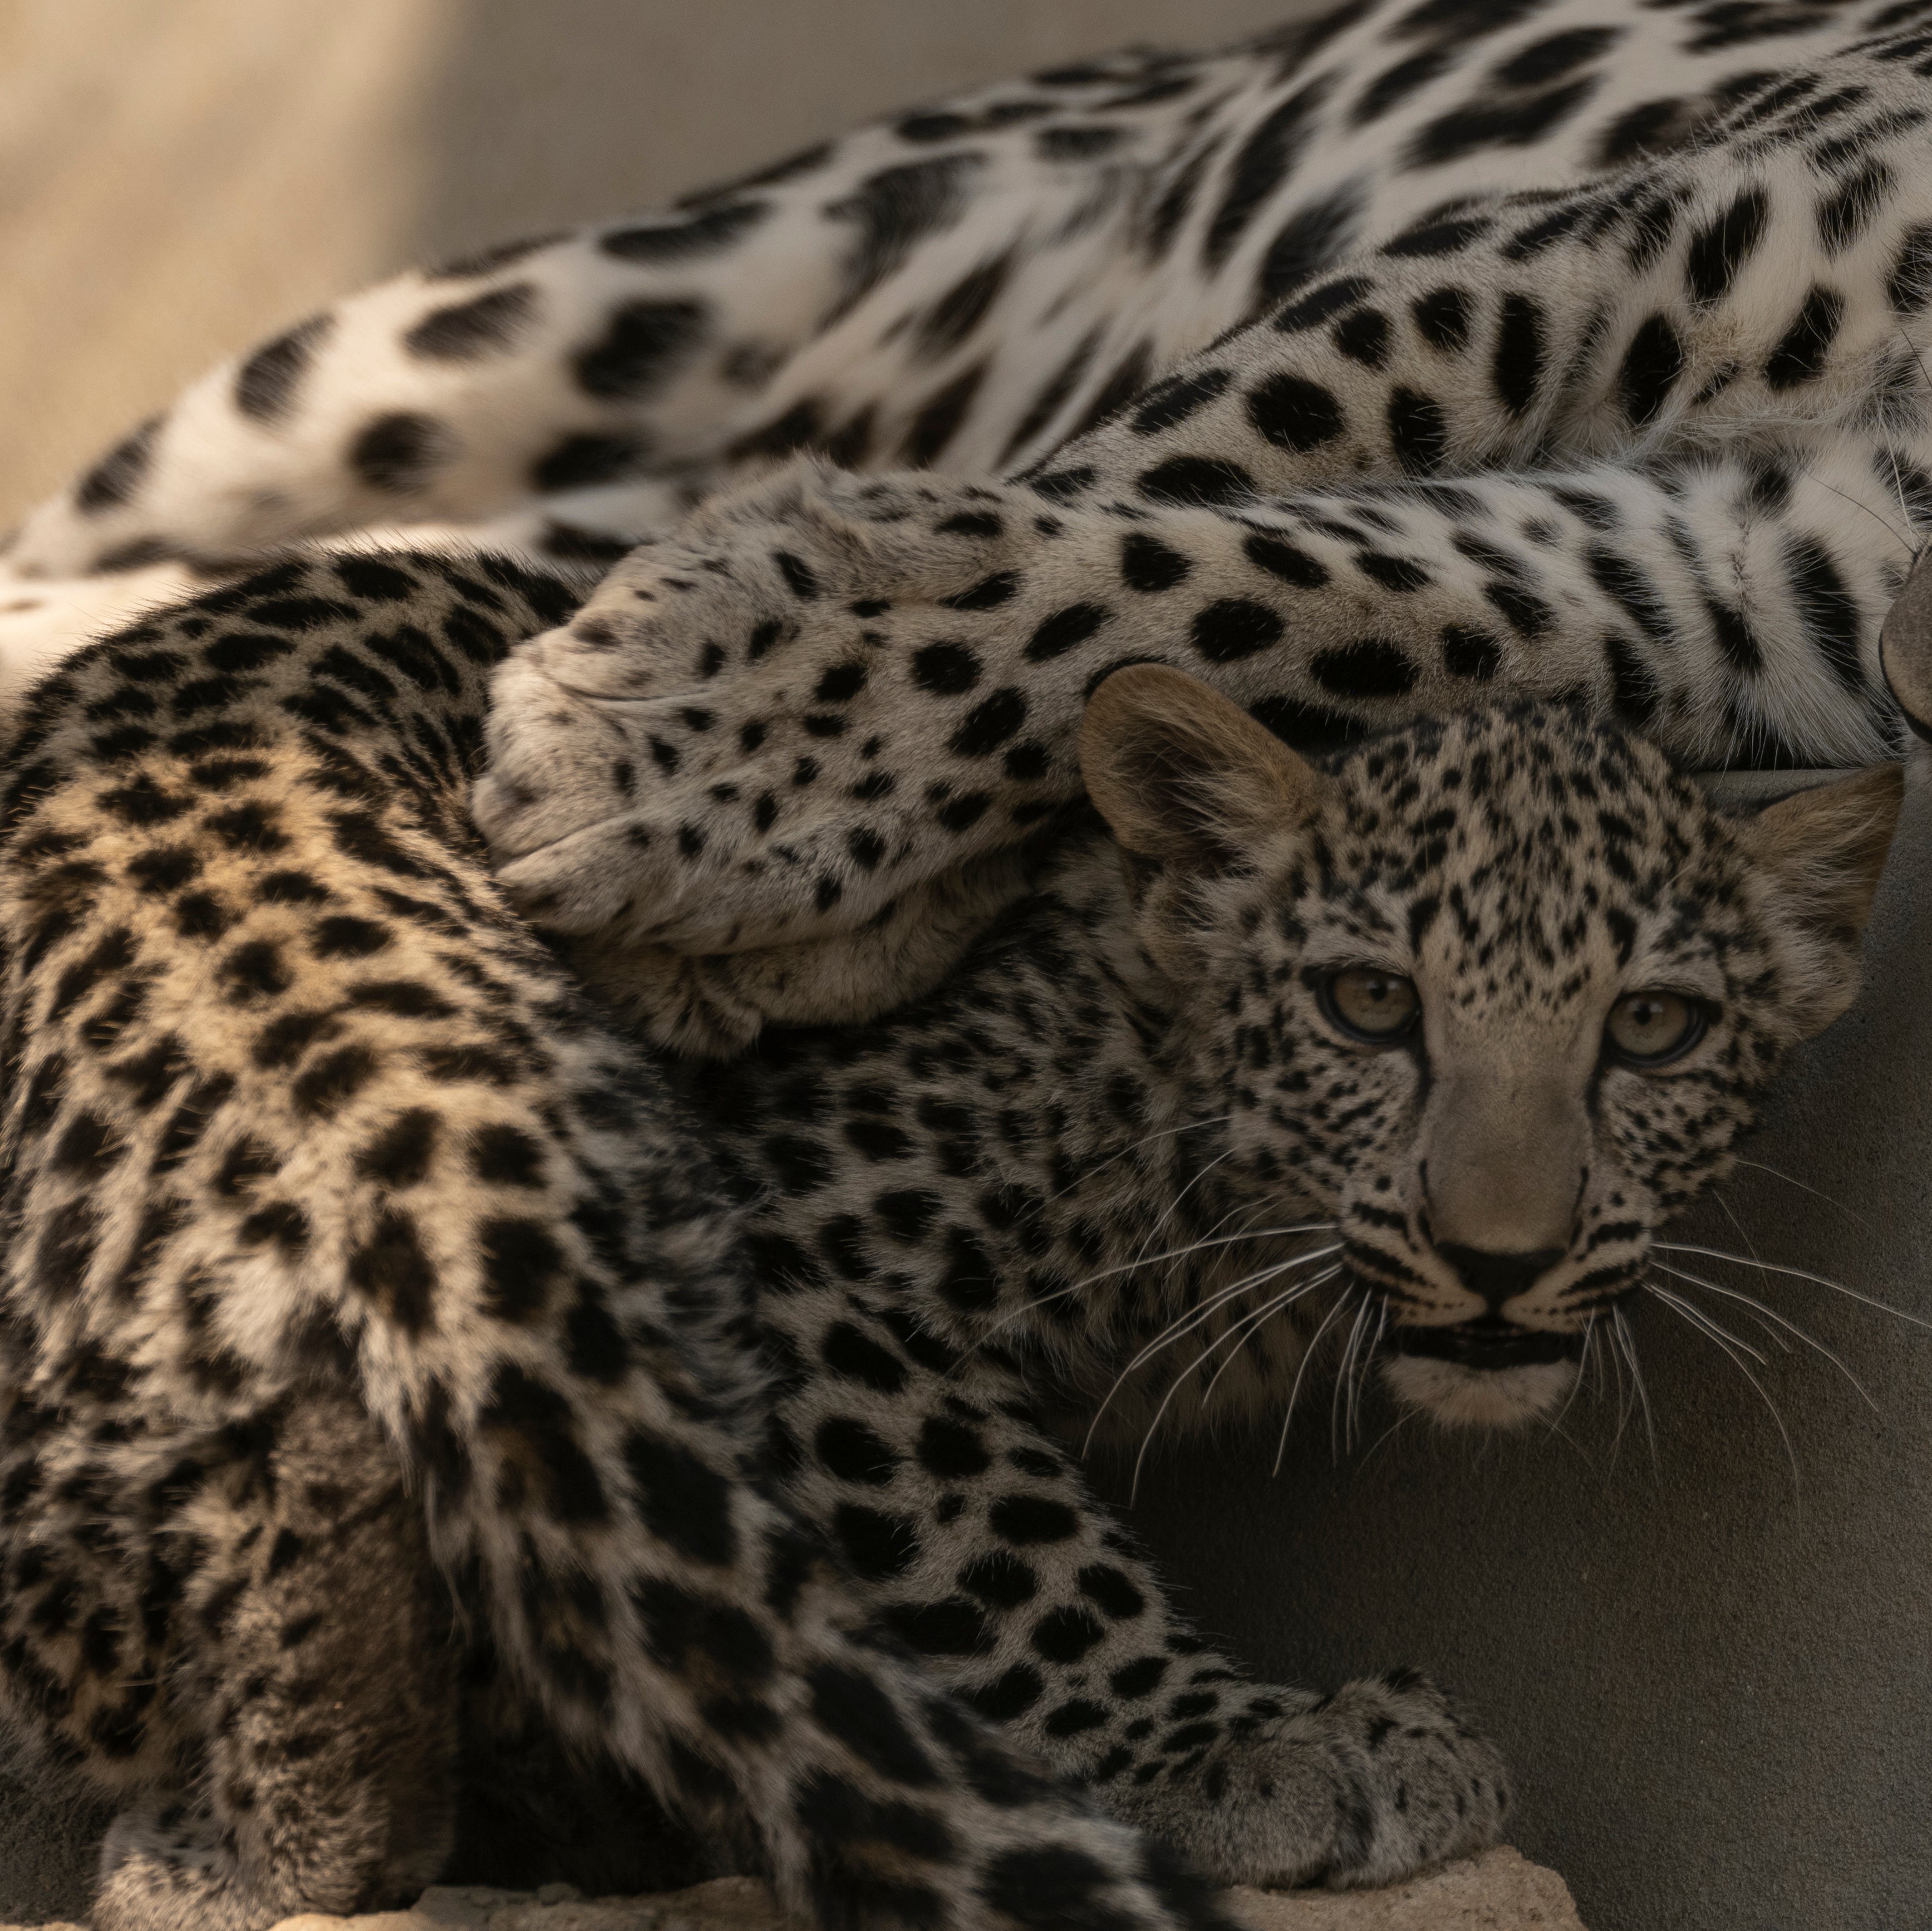 Amal (Hope) Arabian Leopard, Taif, Saudi Arabia